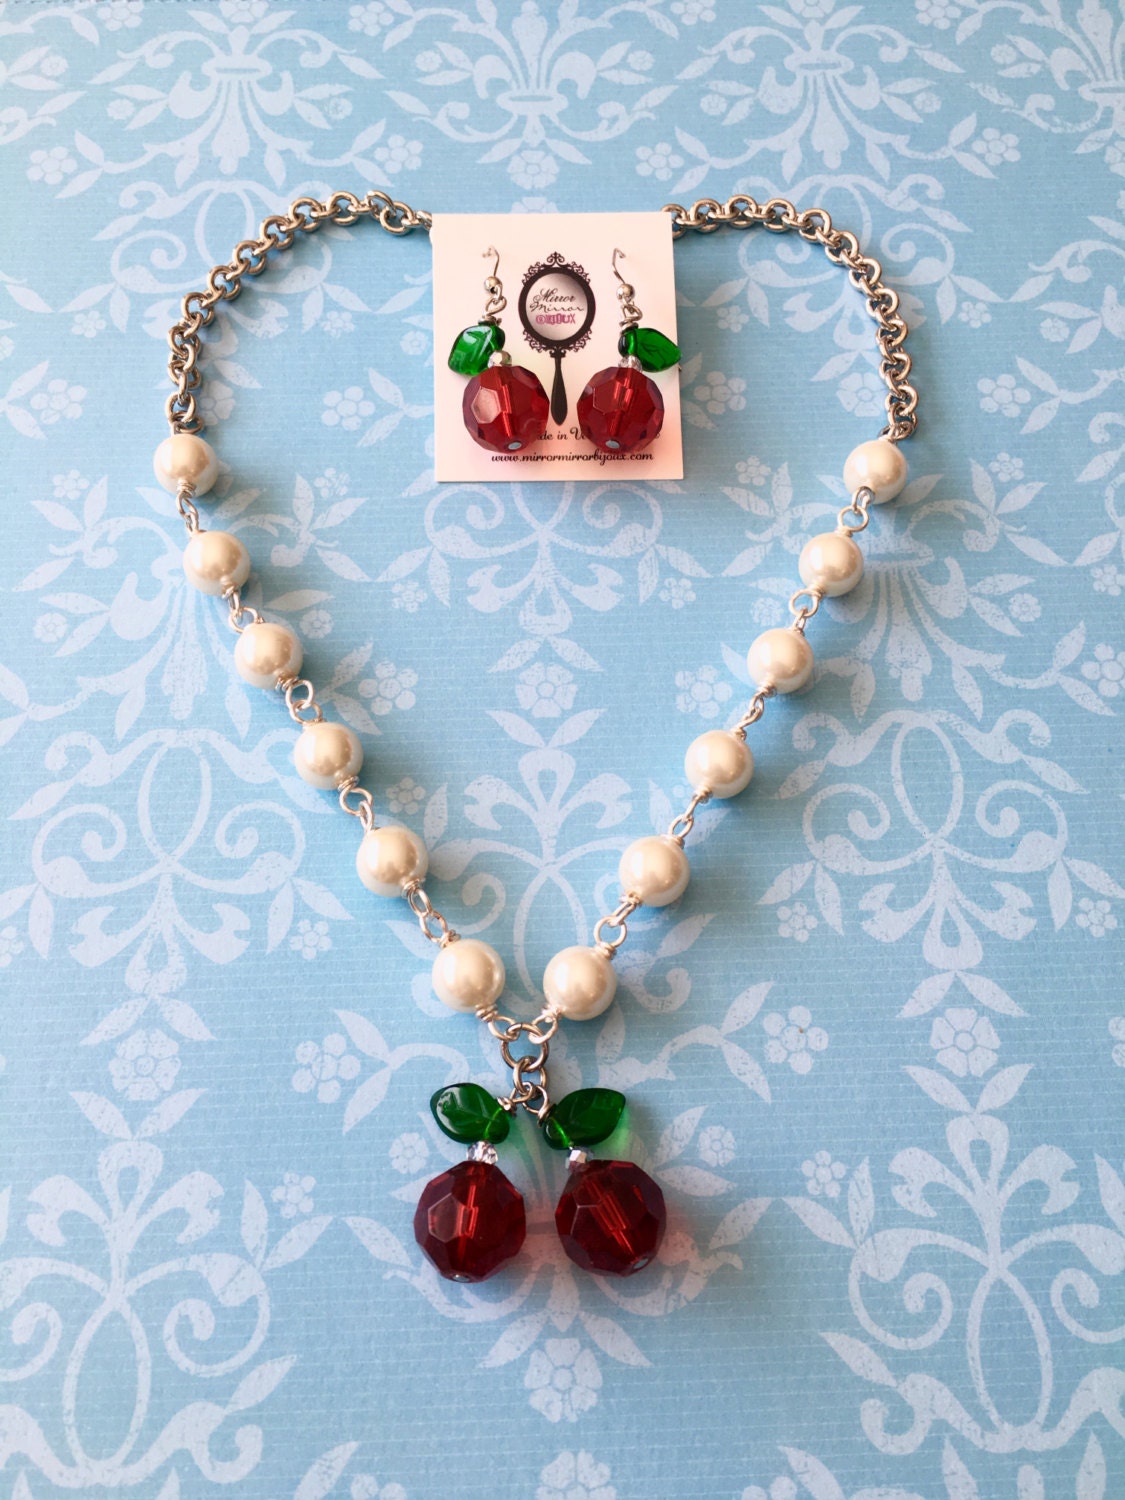 Cherry Necklace 1950s Jewelry Rockabilly Necklace Set 50s - Etsy